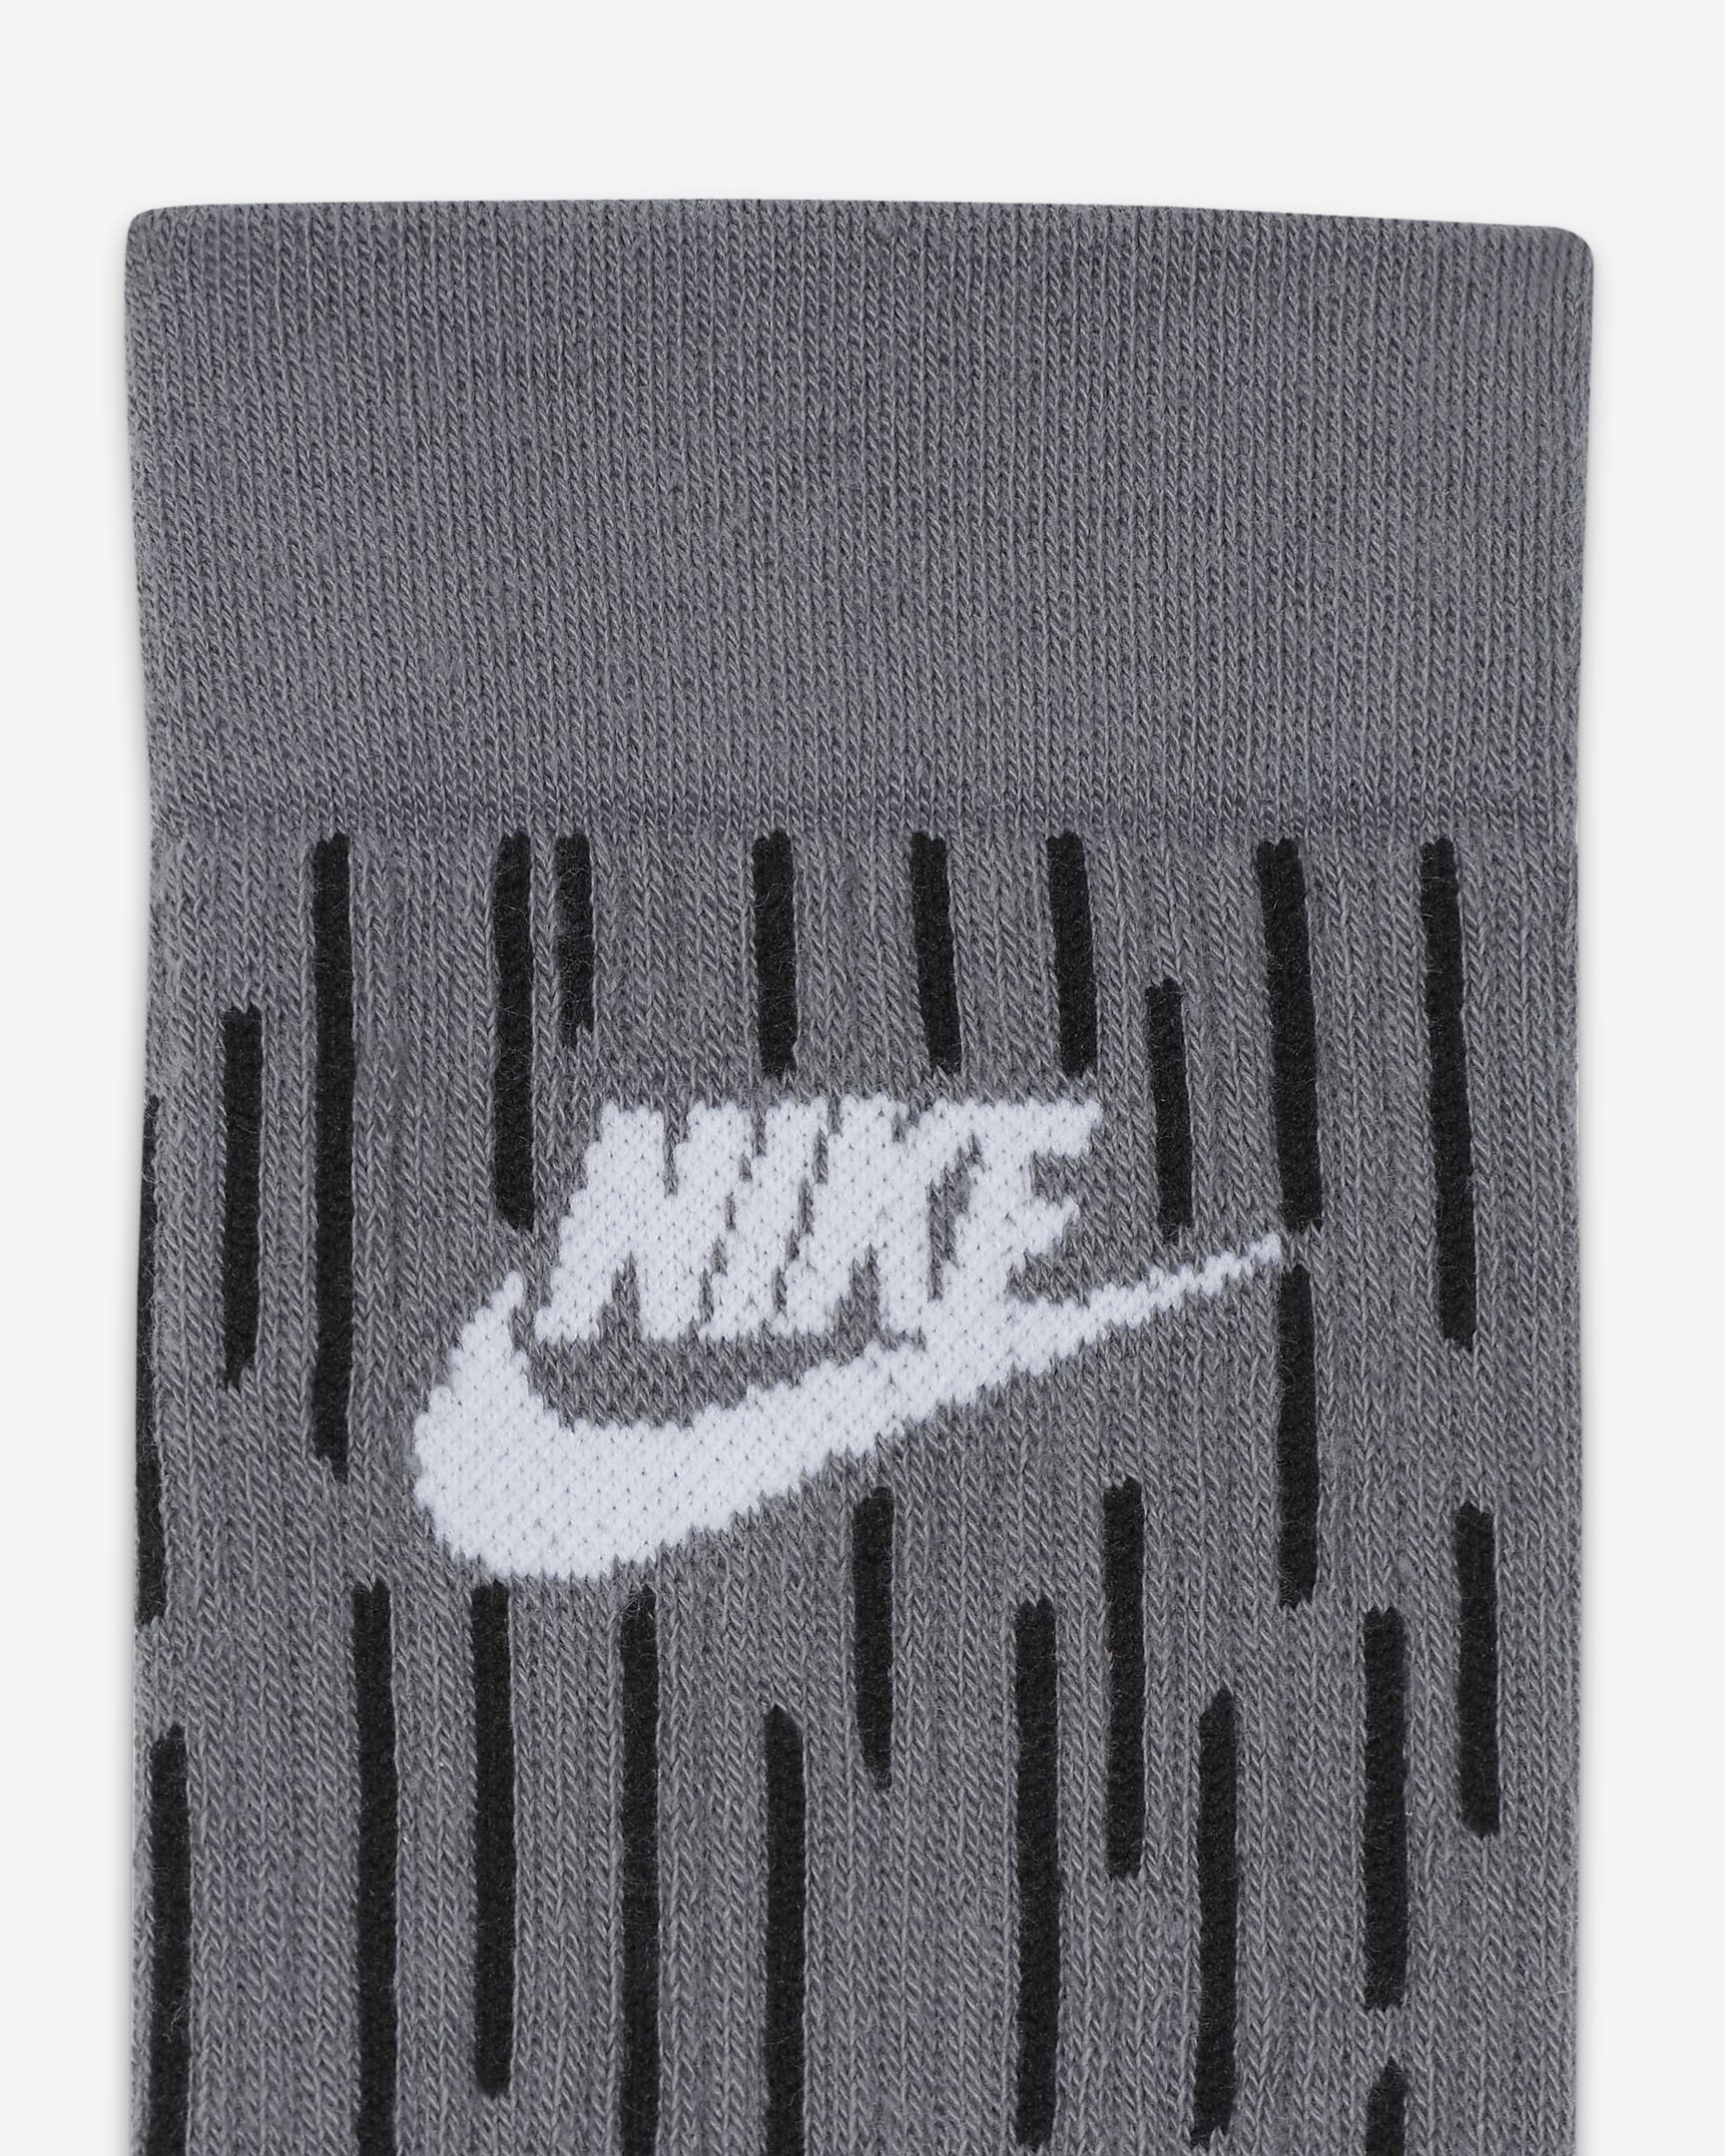 Nike Everyday Essential Crew Socks (3 Pairs) - Multi-Colour